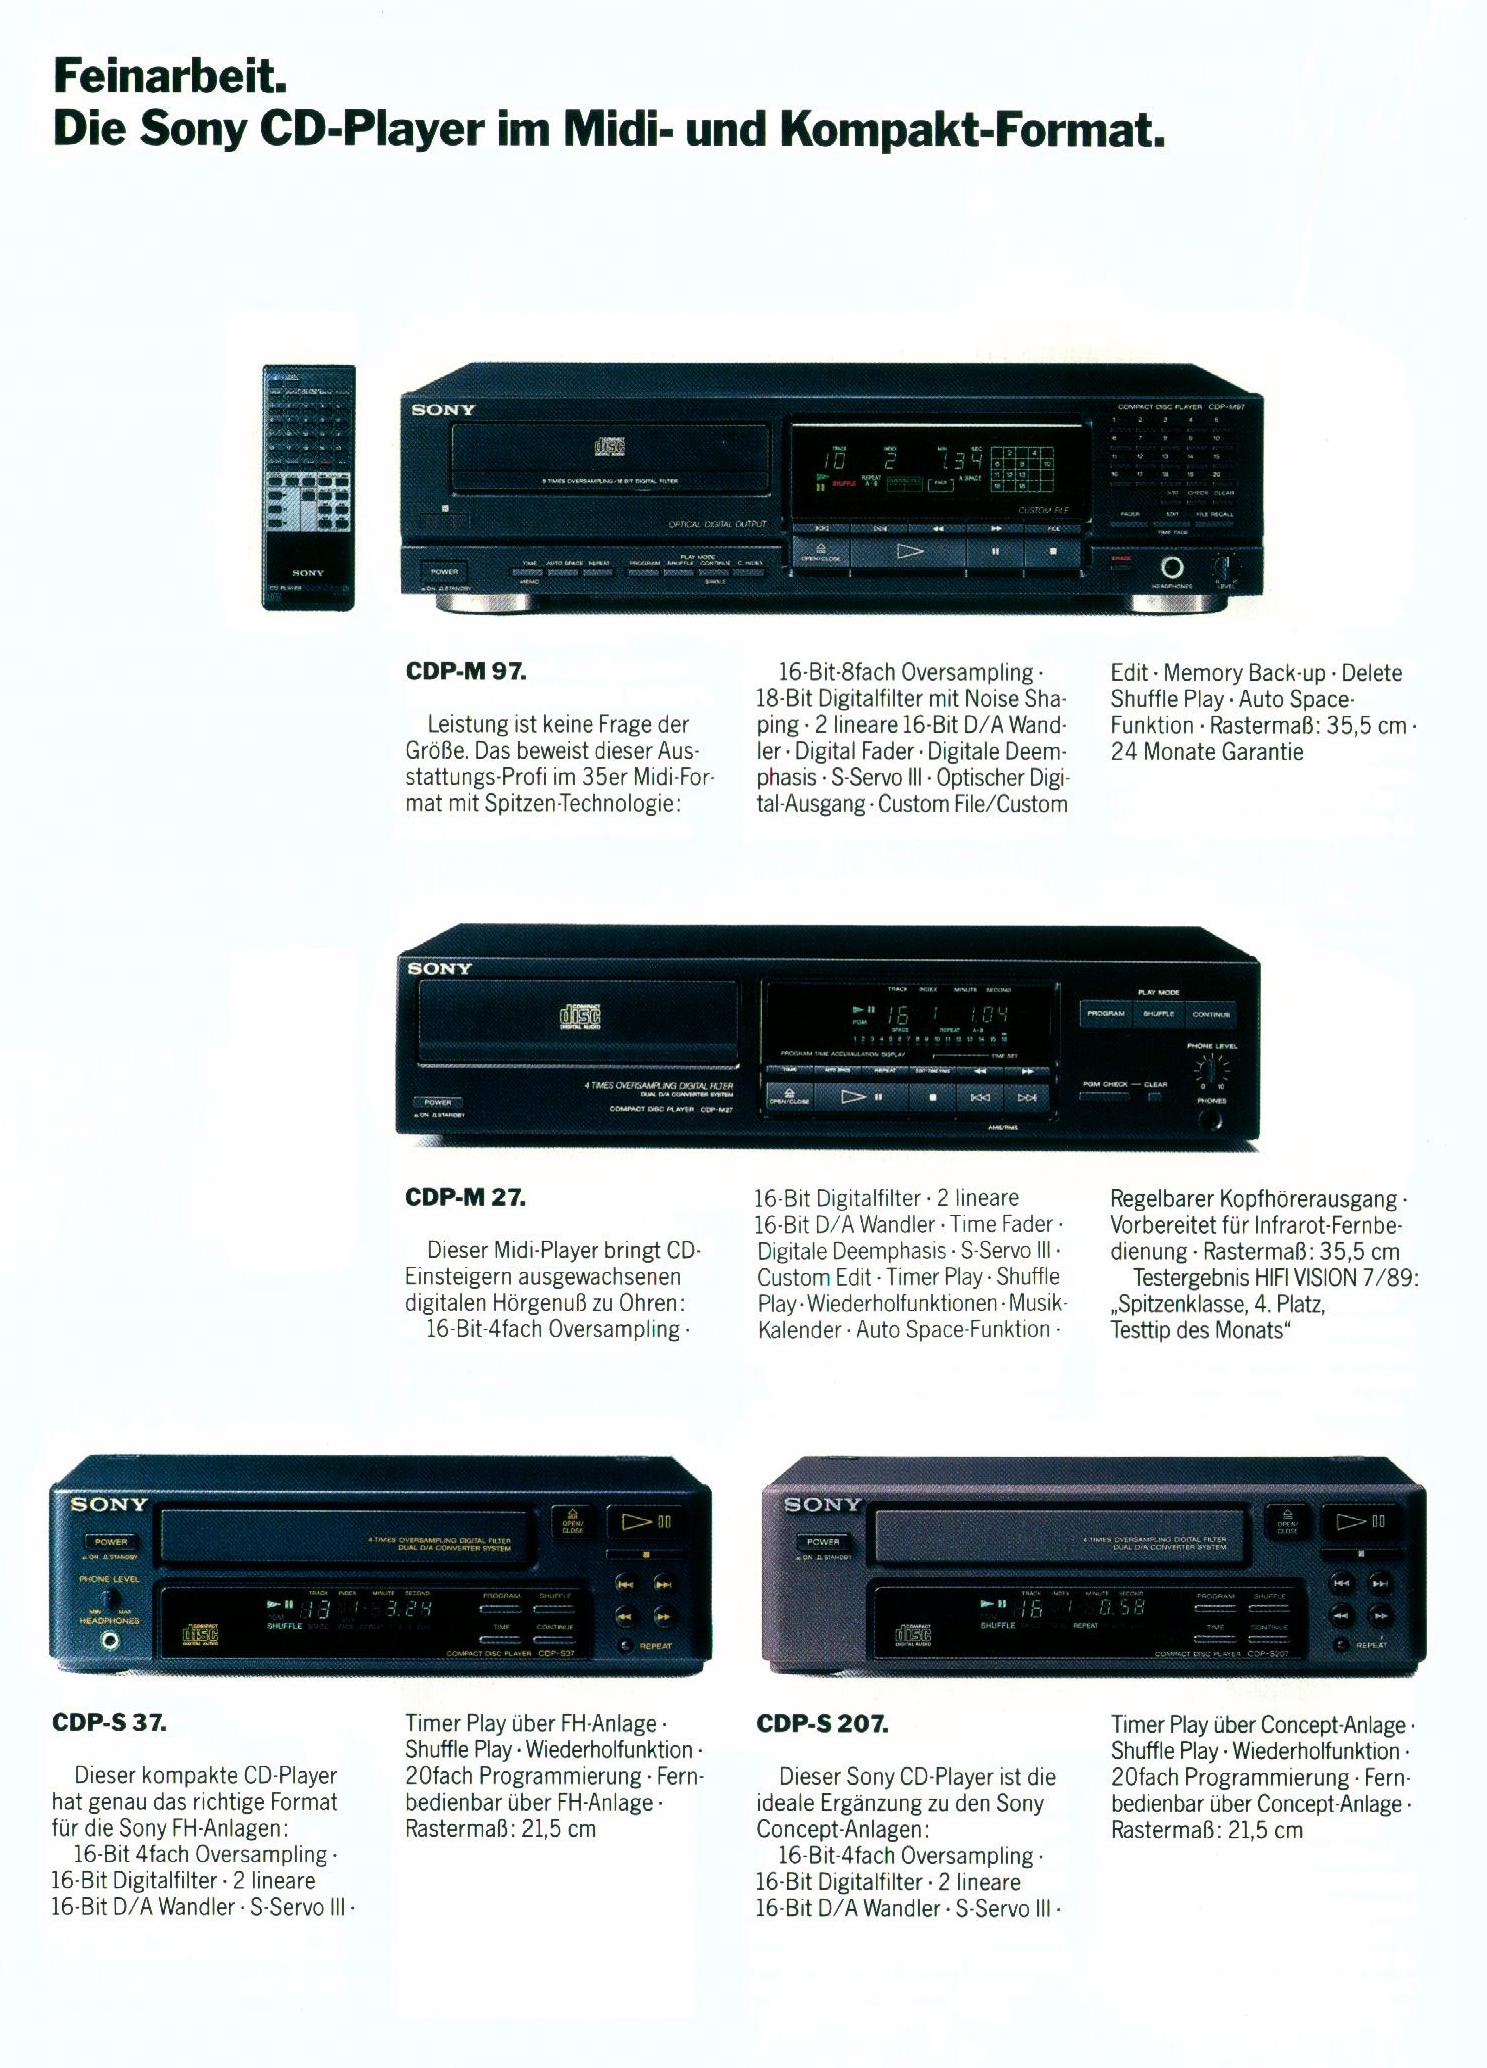 Sony CDP-M 27-97-S 37-207-Prospekt-1989.jpg